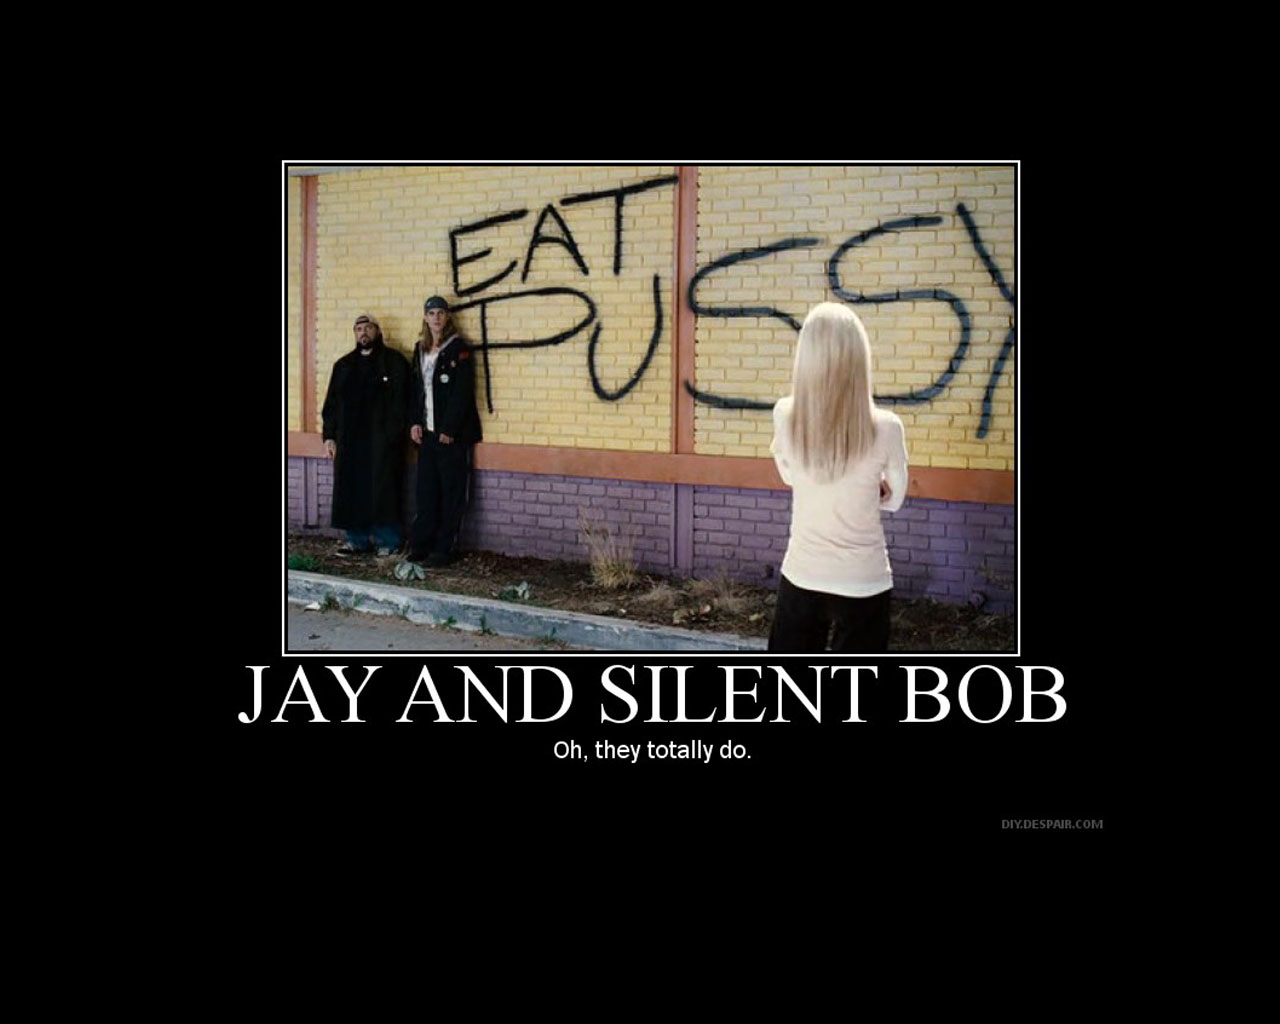 jay and silent bob